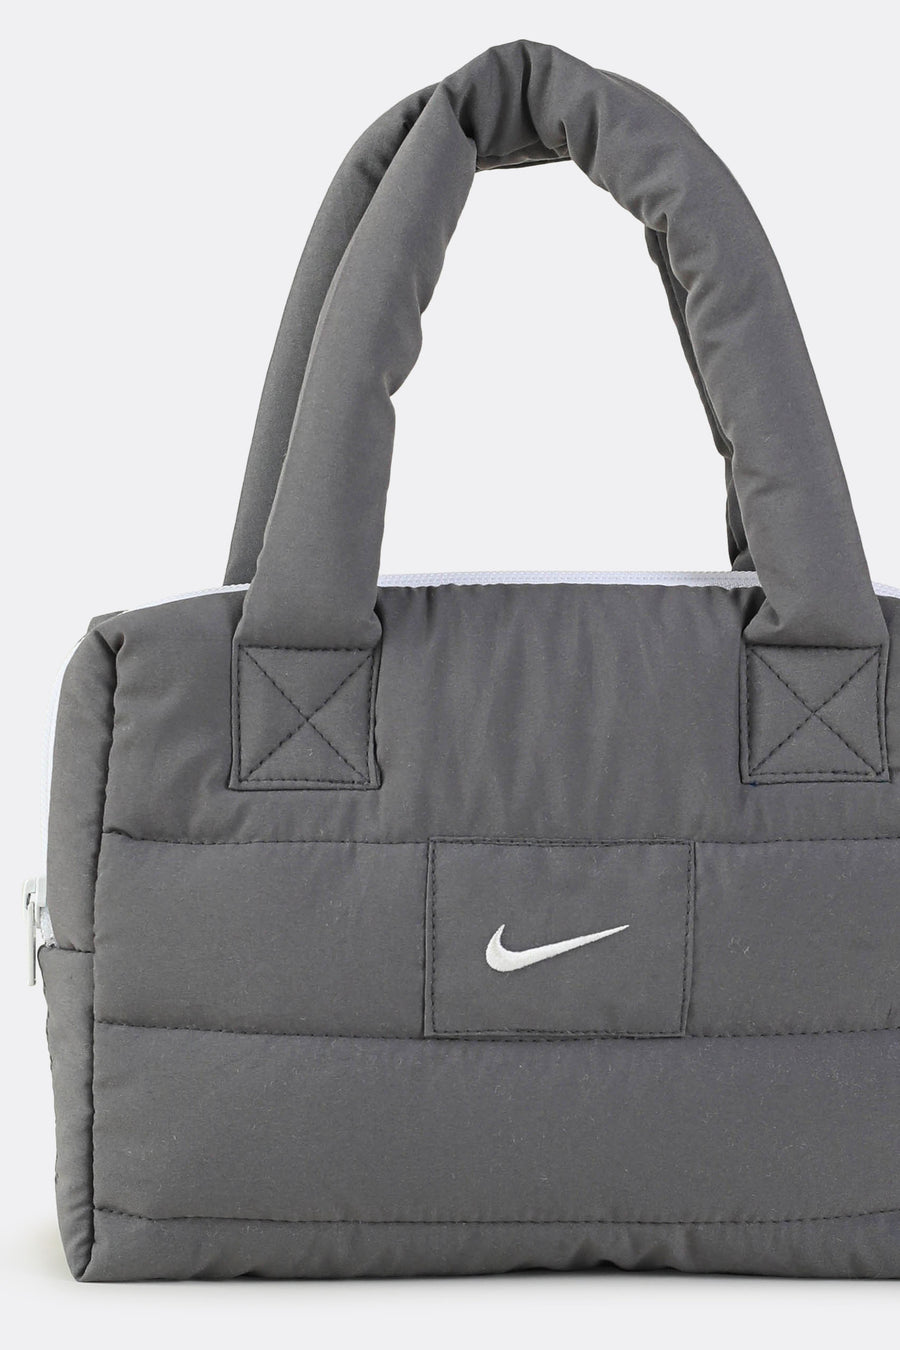 Rework Nike Puffer Bag